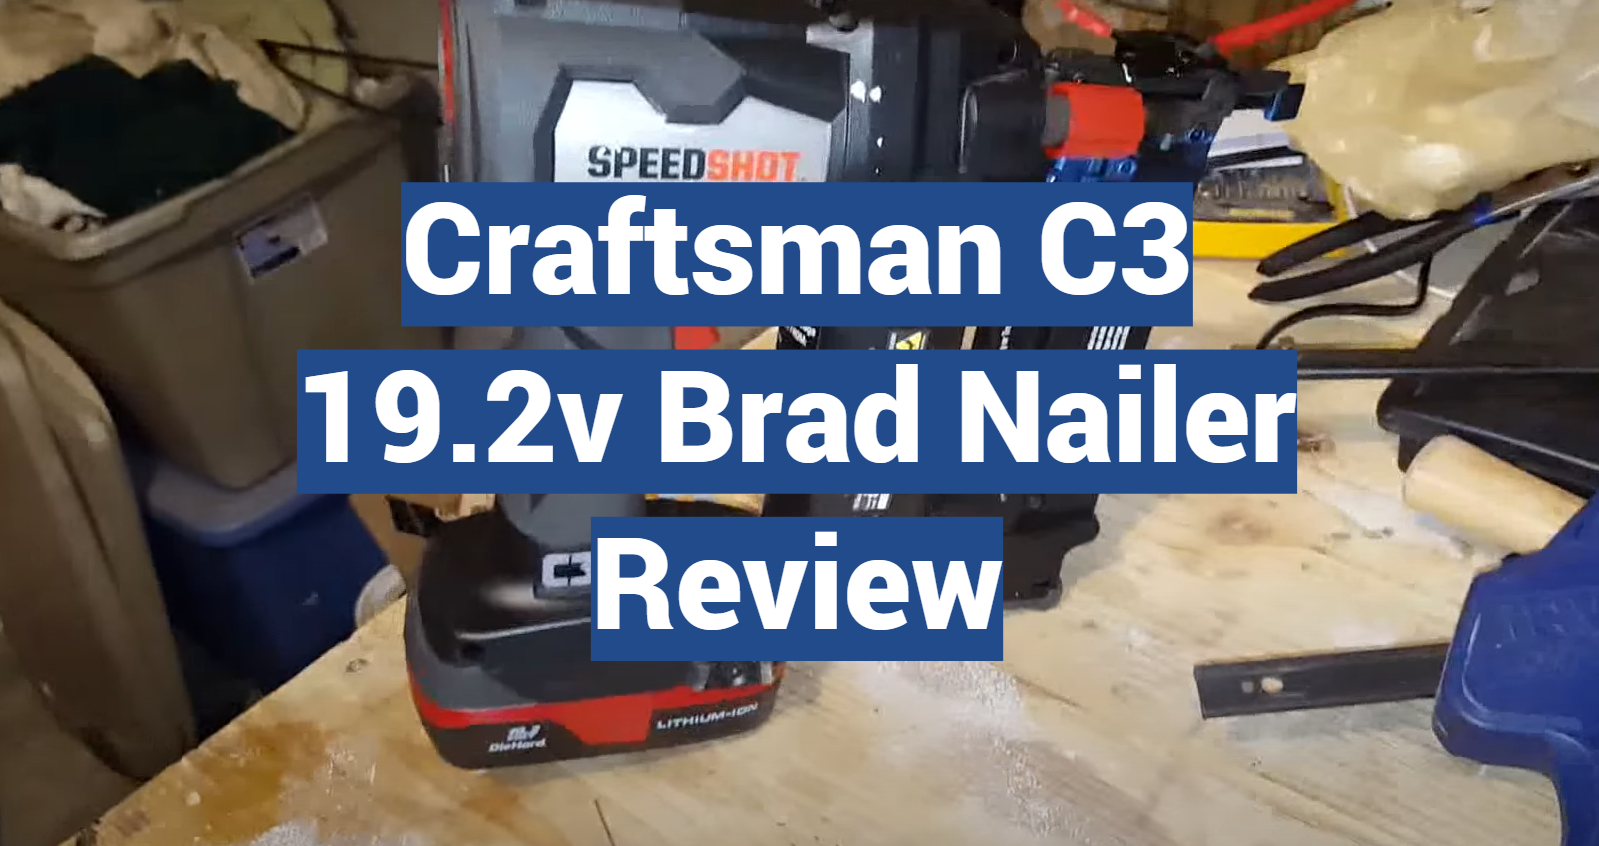 Craftsman C3 19.2v Brad Nailer Review in 2022 - NailersHub